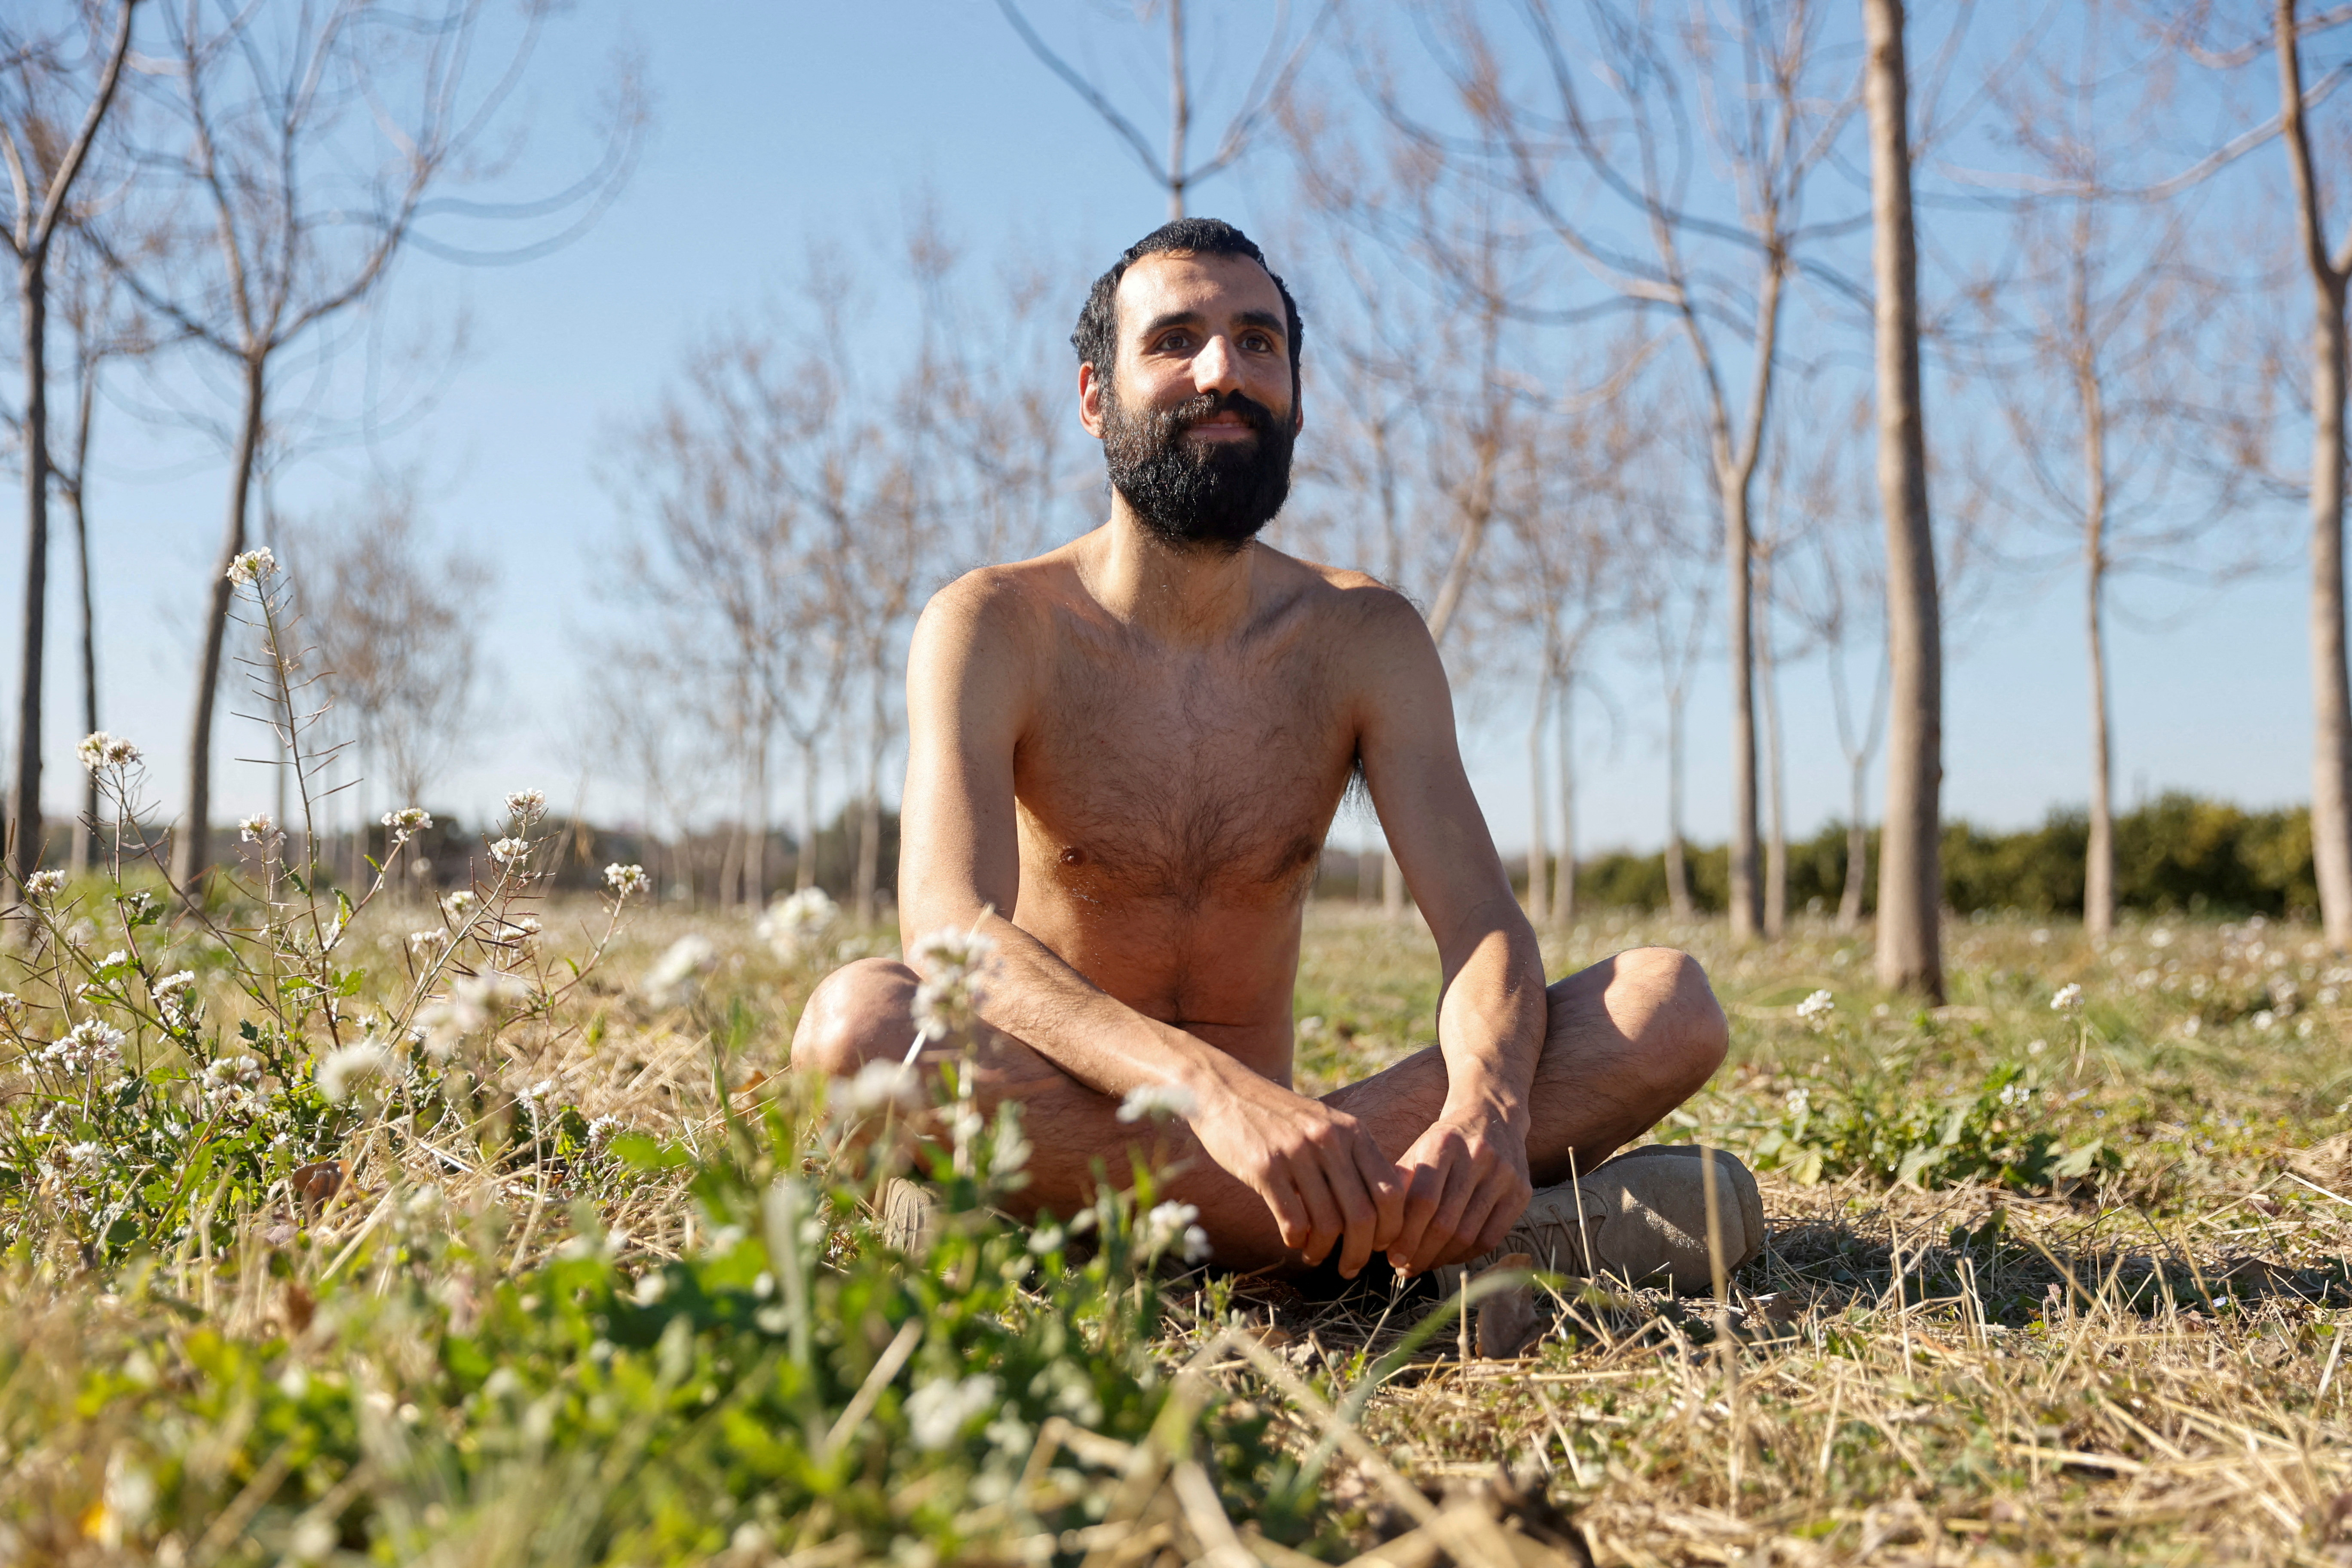 Alejandro Colomar poses naked in his vegetable garden in Aldaia